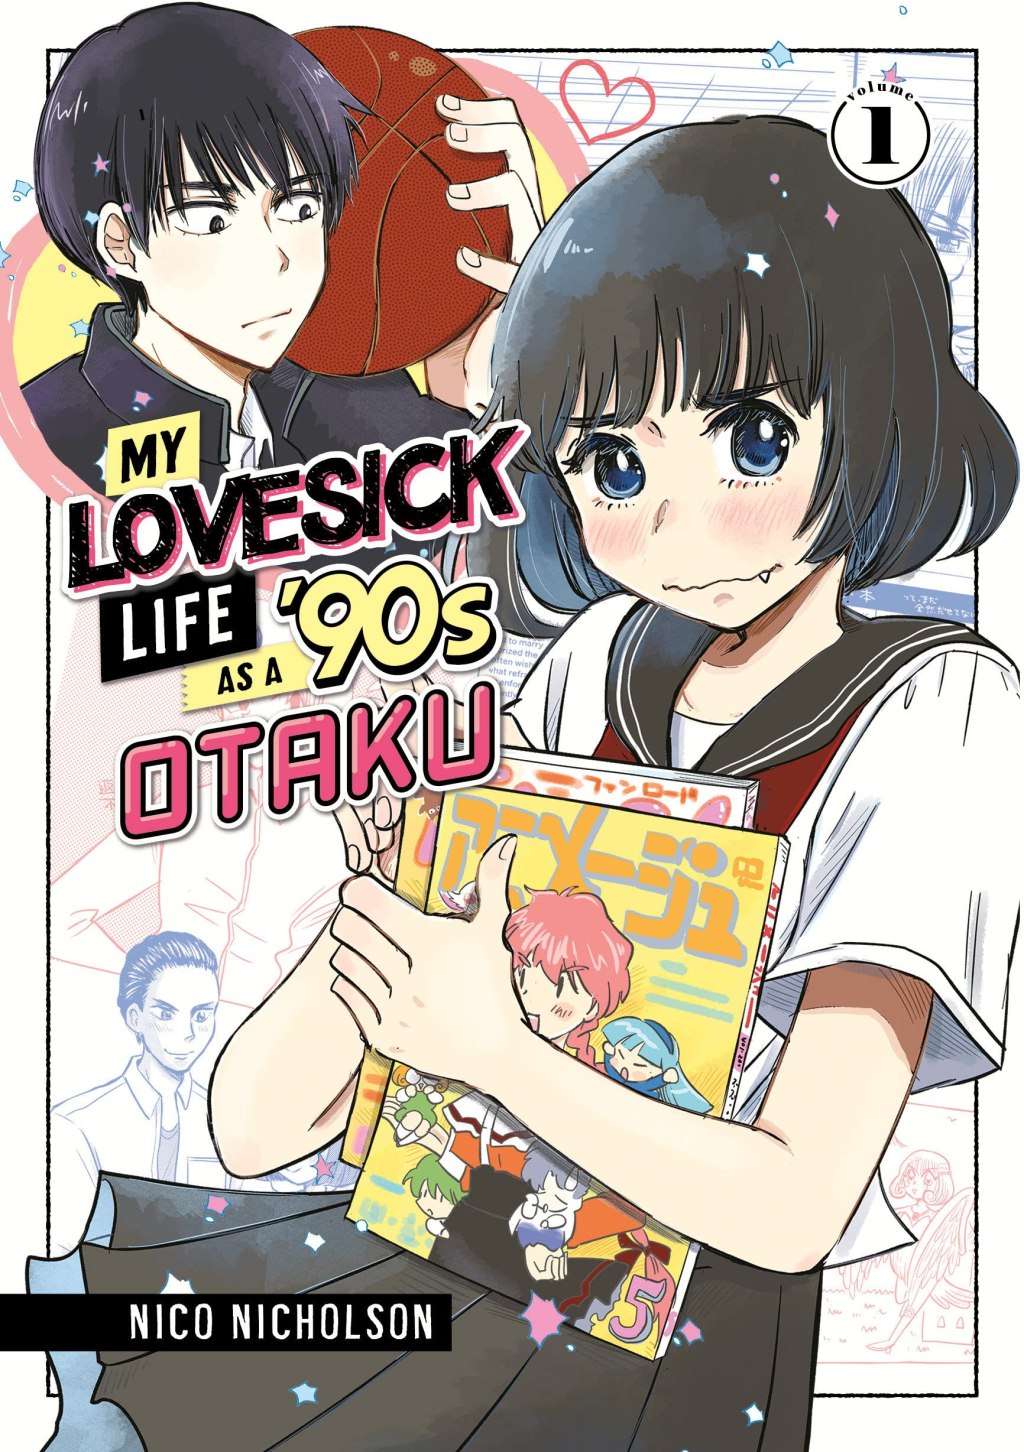 Manga Musings : My Lovesick Life as a 90’s Otaku by Nico Nicholson